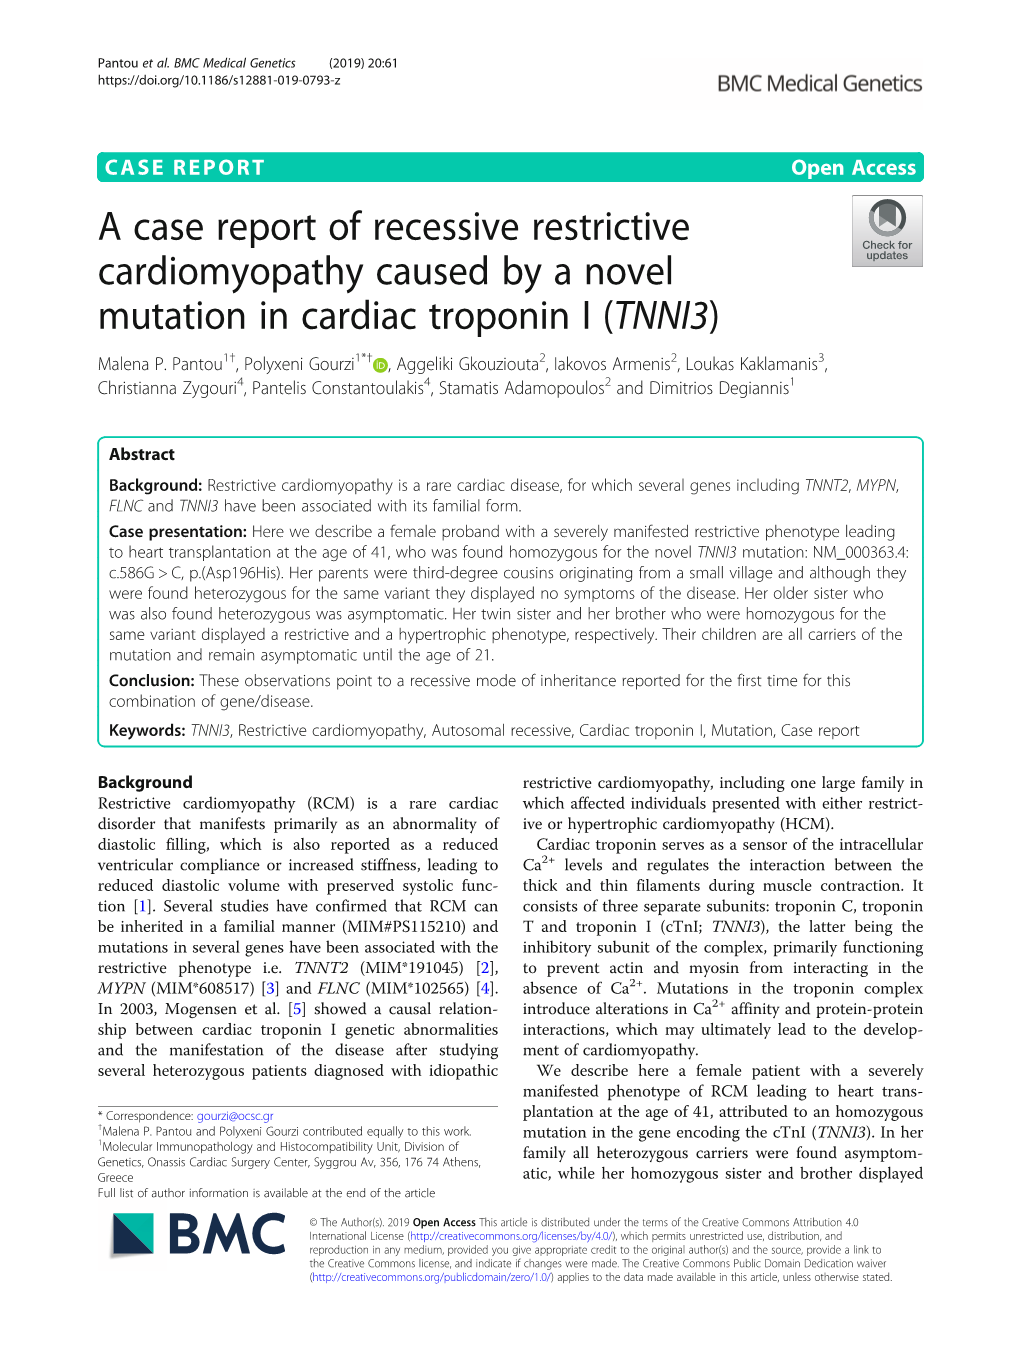 A Case Report of Recessive Restrictive Cardiomyopathy Caused by a Novel Mutation in Cardiac Troponin I (TNNI3) Malena P